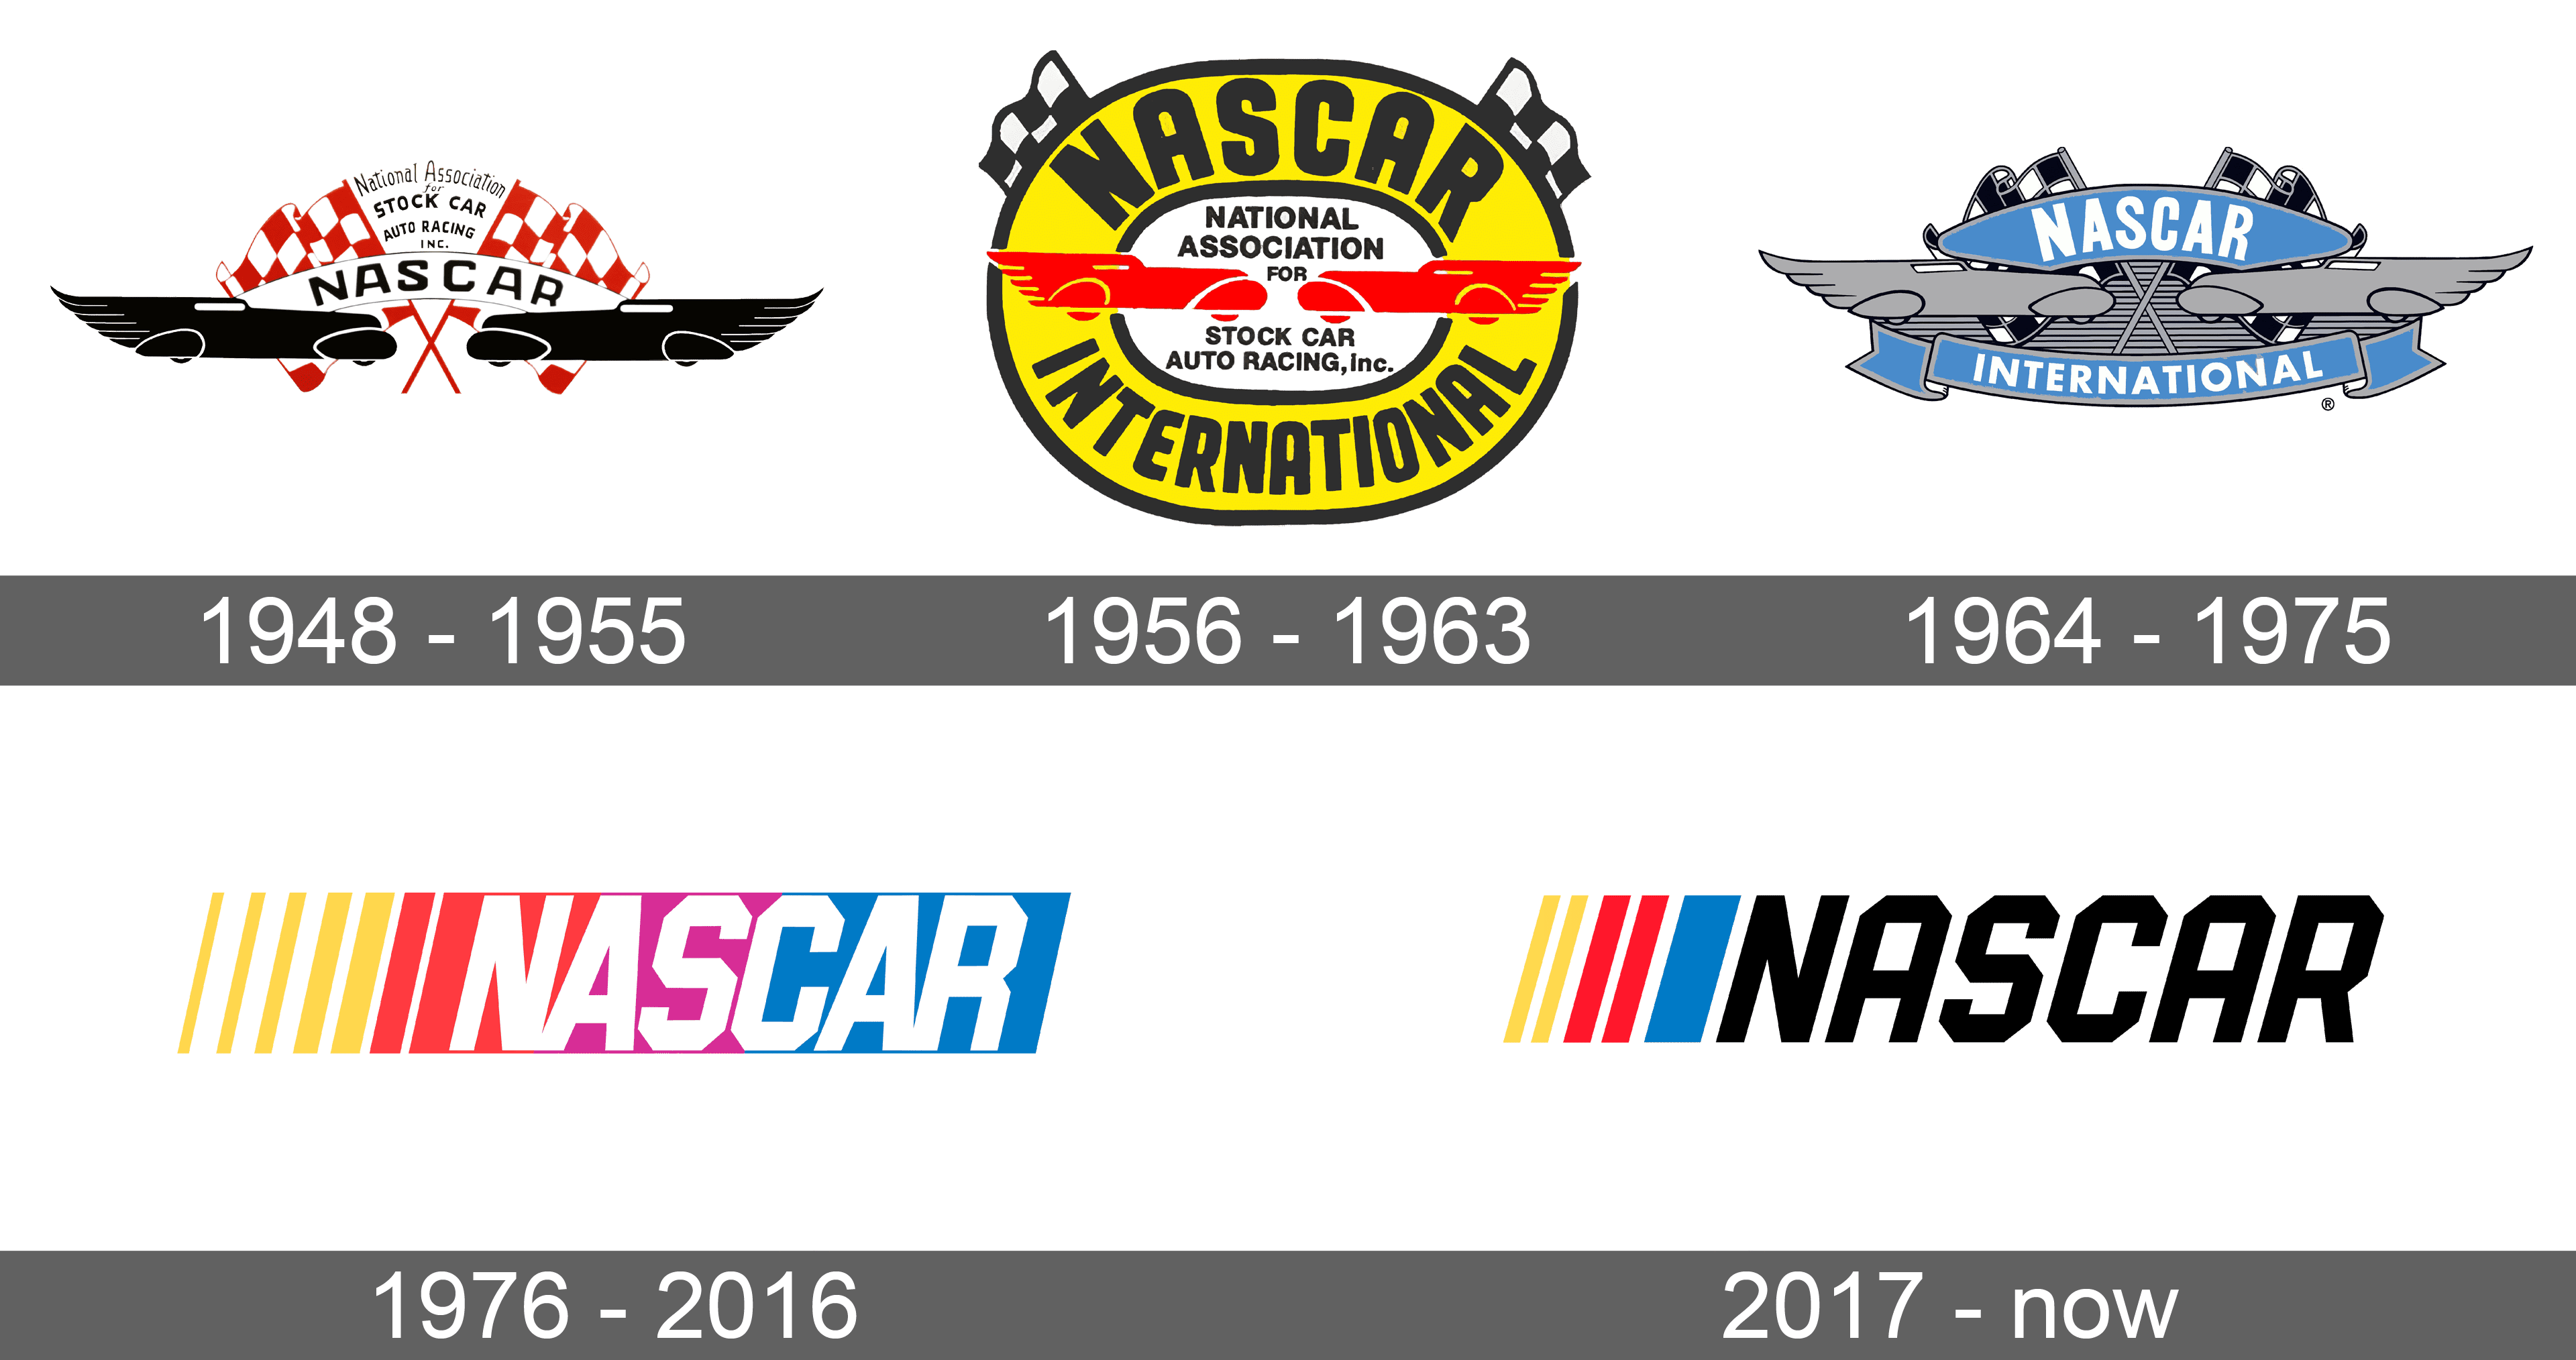 nascar race car logo - Kind Of Nice Blogsphere Picture Show